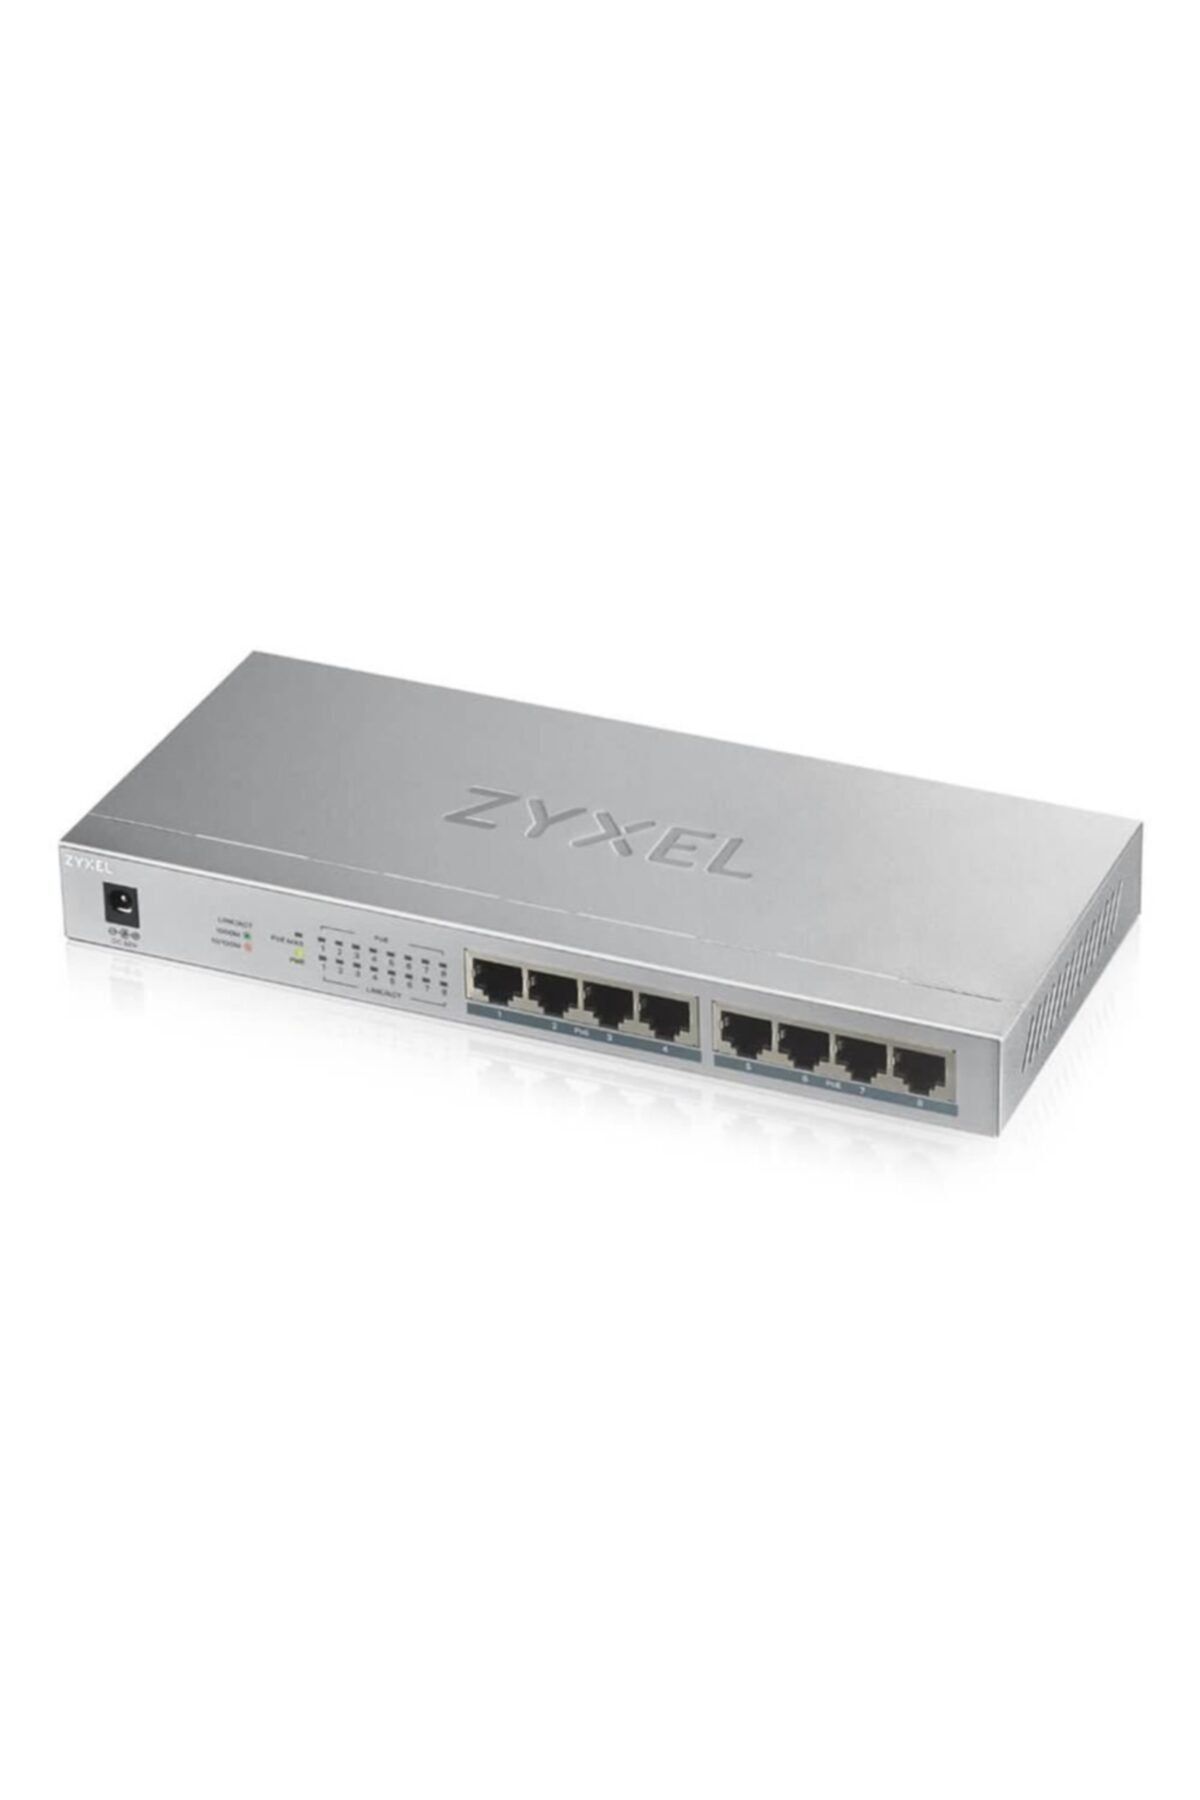 Zyxel Gs-1008hp 8 Port Poe+ Gigabit 10/100/1000 Mbps Switch